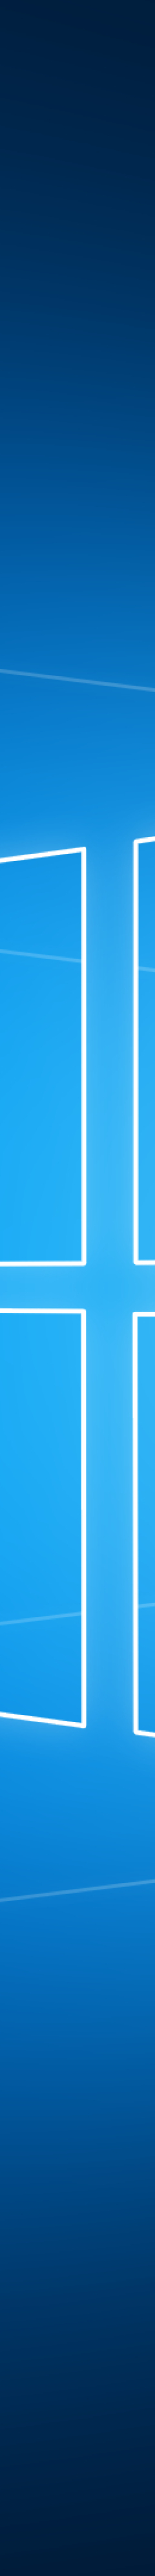 240x4000 Windows 10 Hero Logo 240x4000 Resolution Wallpaper Hd Brands